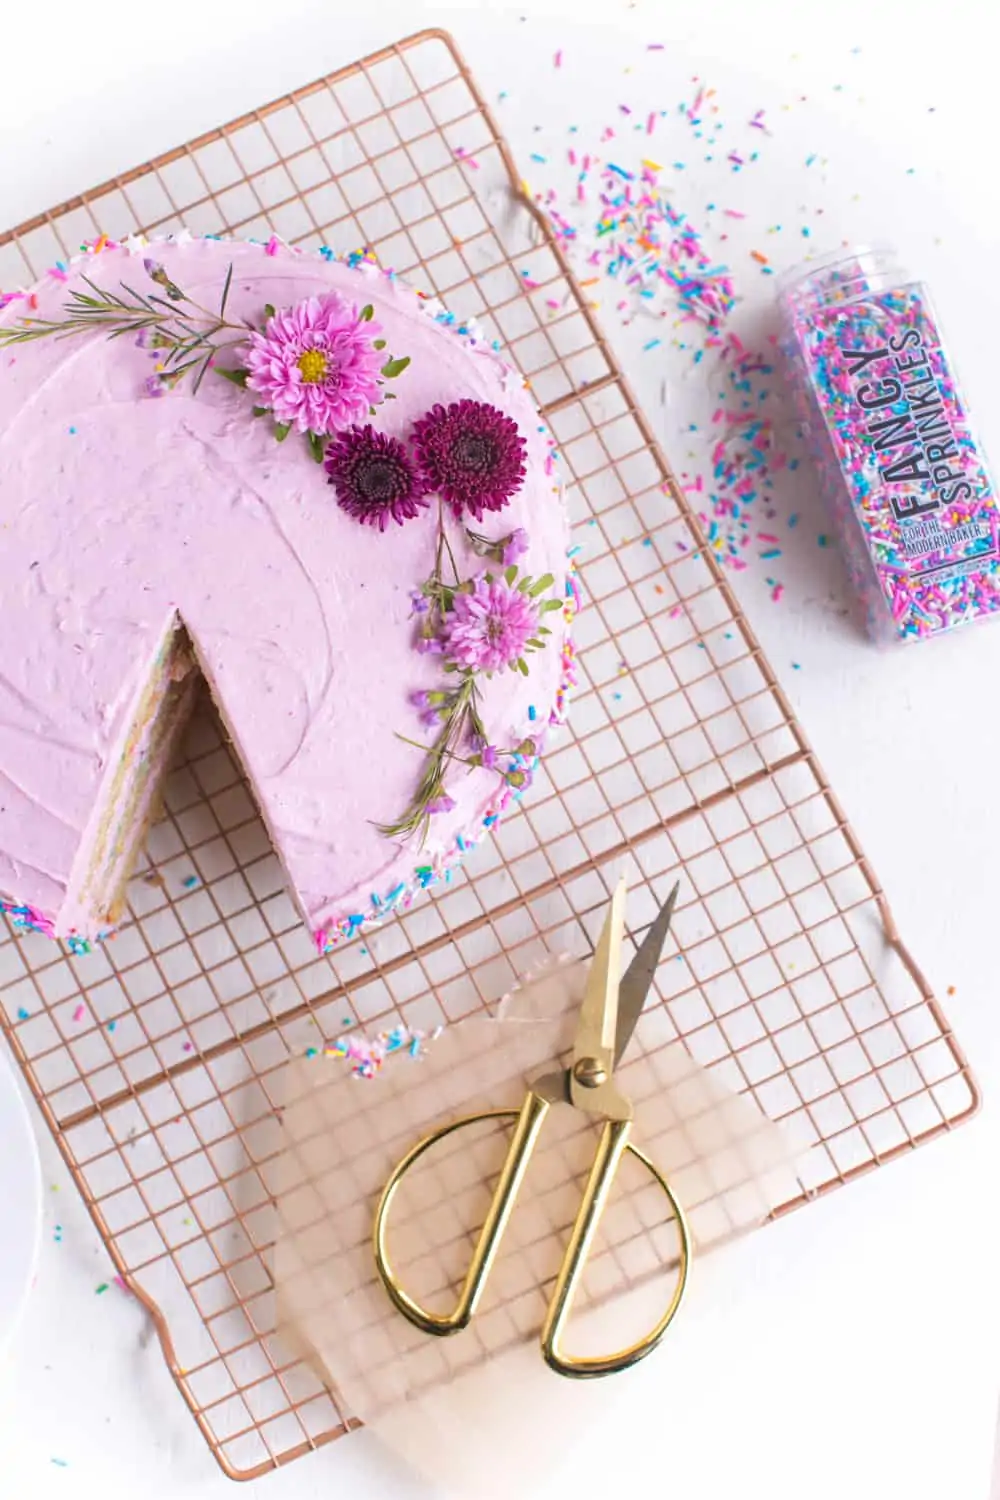 Vegan Birthday Cake | Confetti Cake With Fancy Sprinkles | WorldofVegan.com | #vegan #cake #birthday #confetti #baking #recipe #food